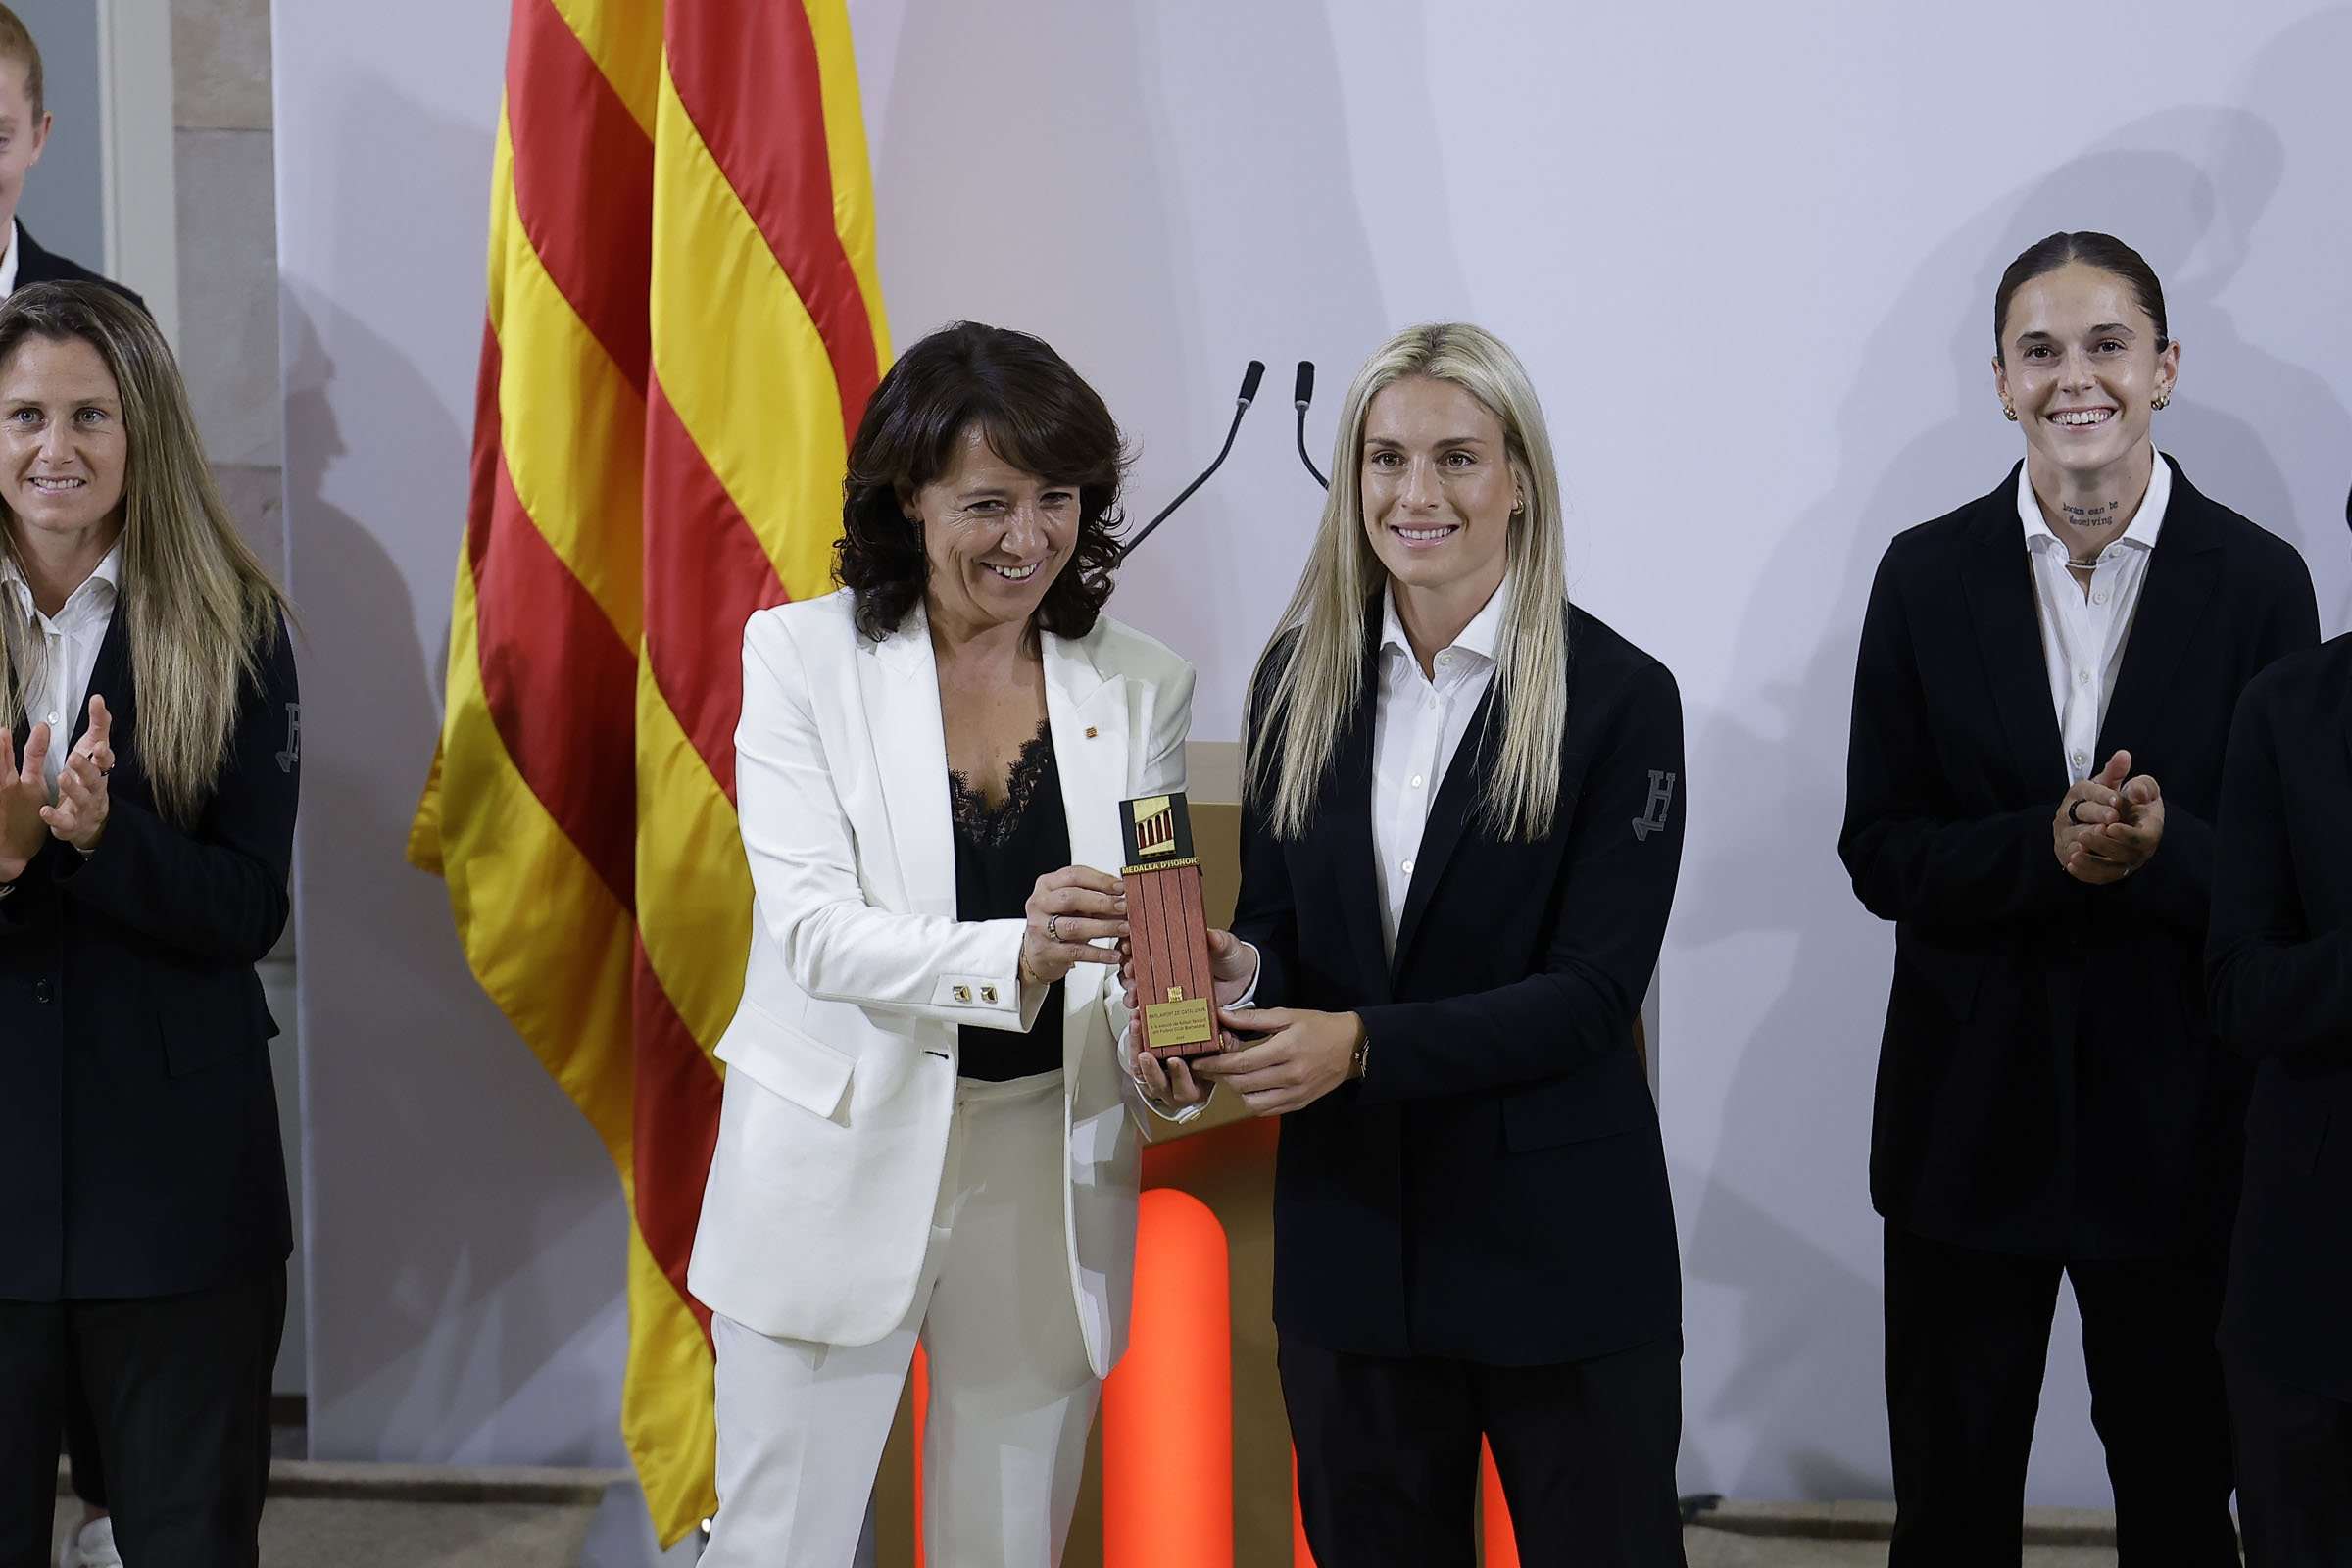 El Parlament de Catalunya otorga la Medalla d'Honor al Barça femenino: "No queremos más faltas de respeto"